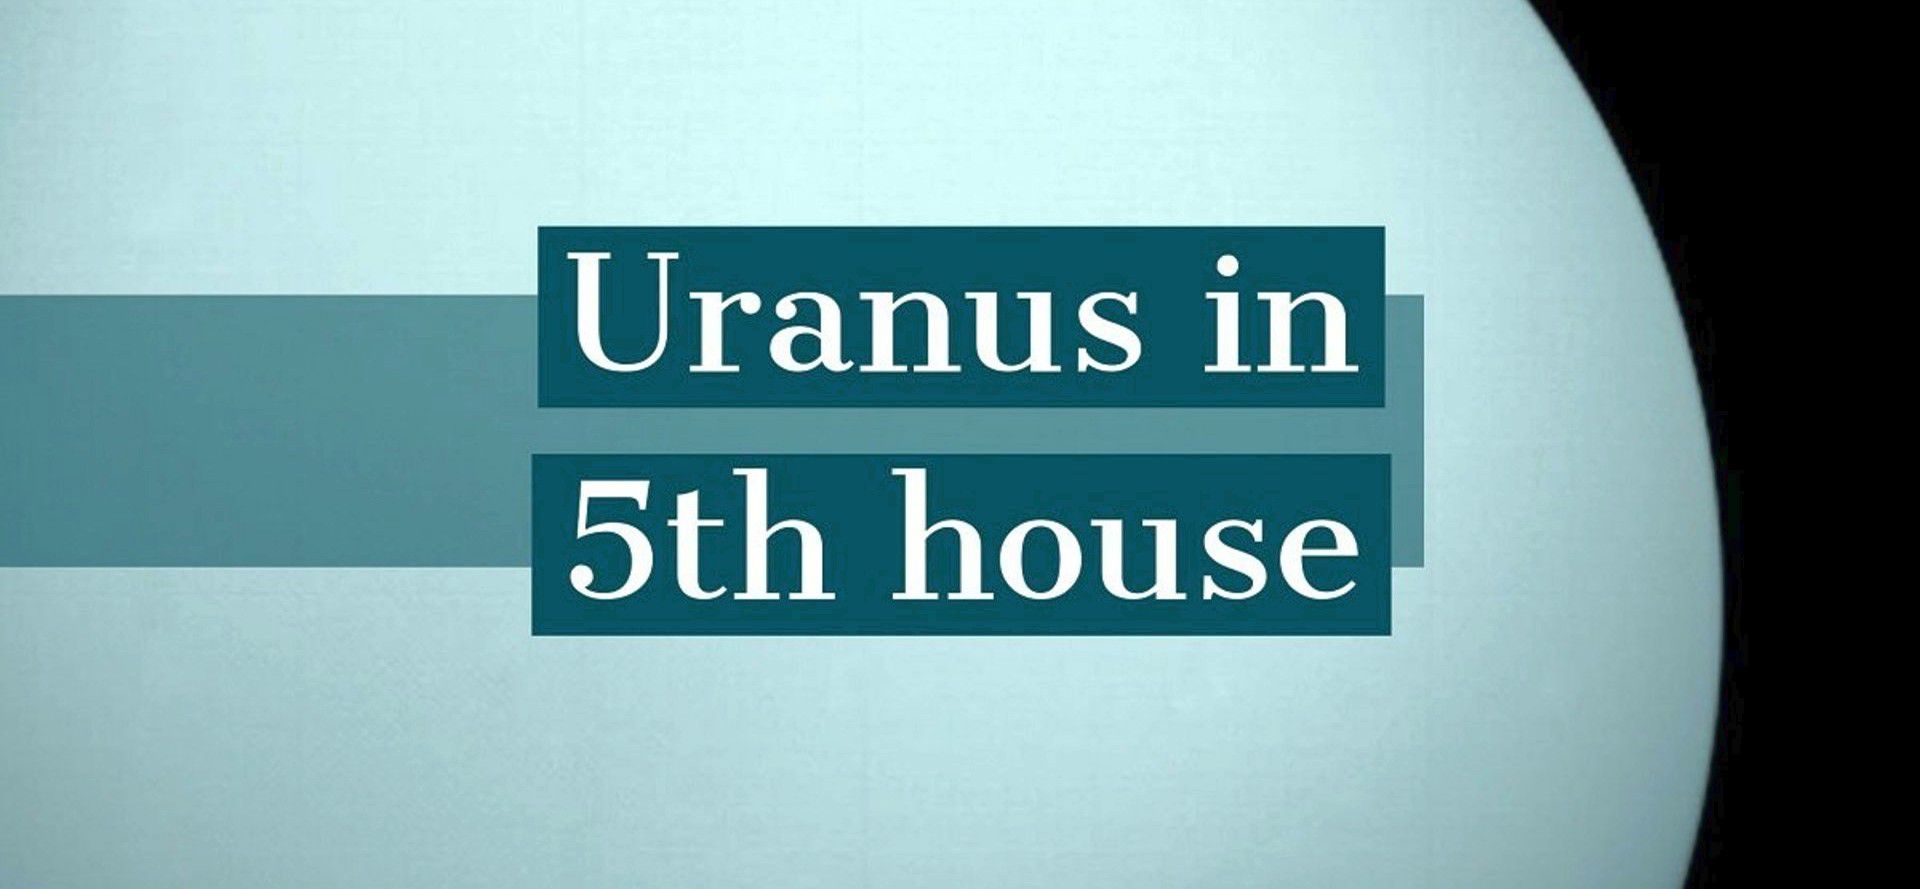 Uranus in 5th house.